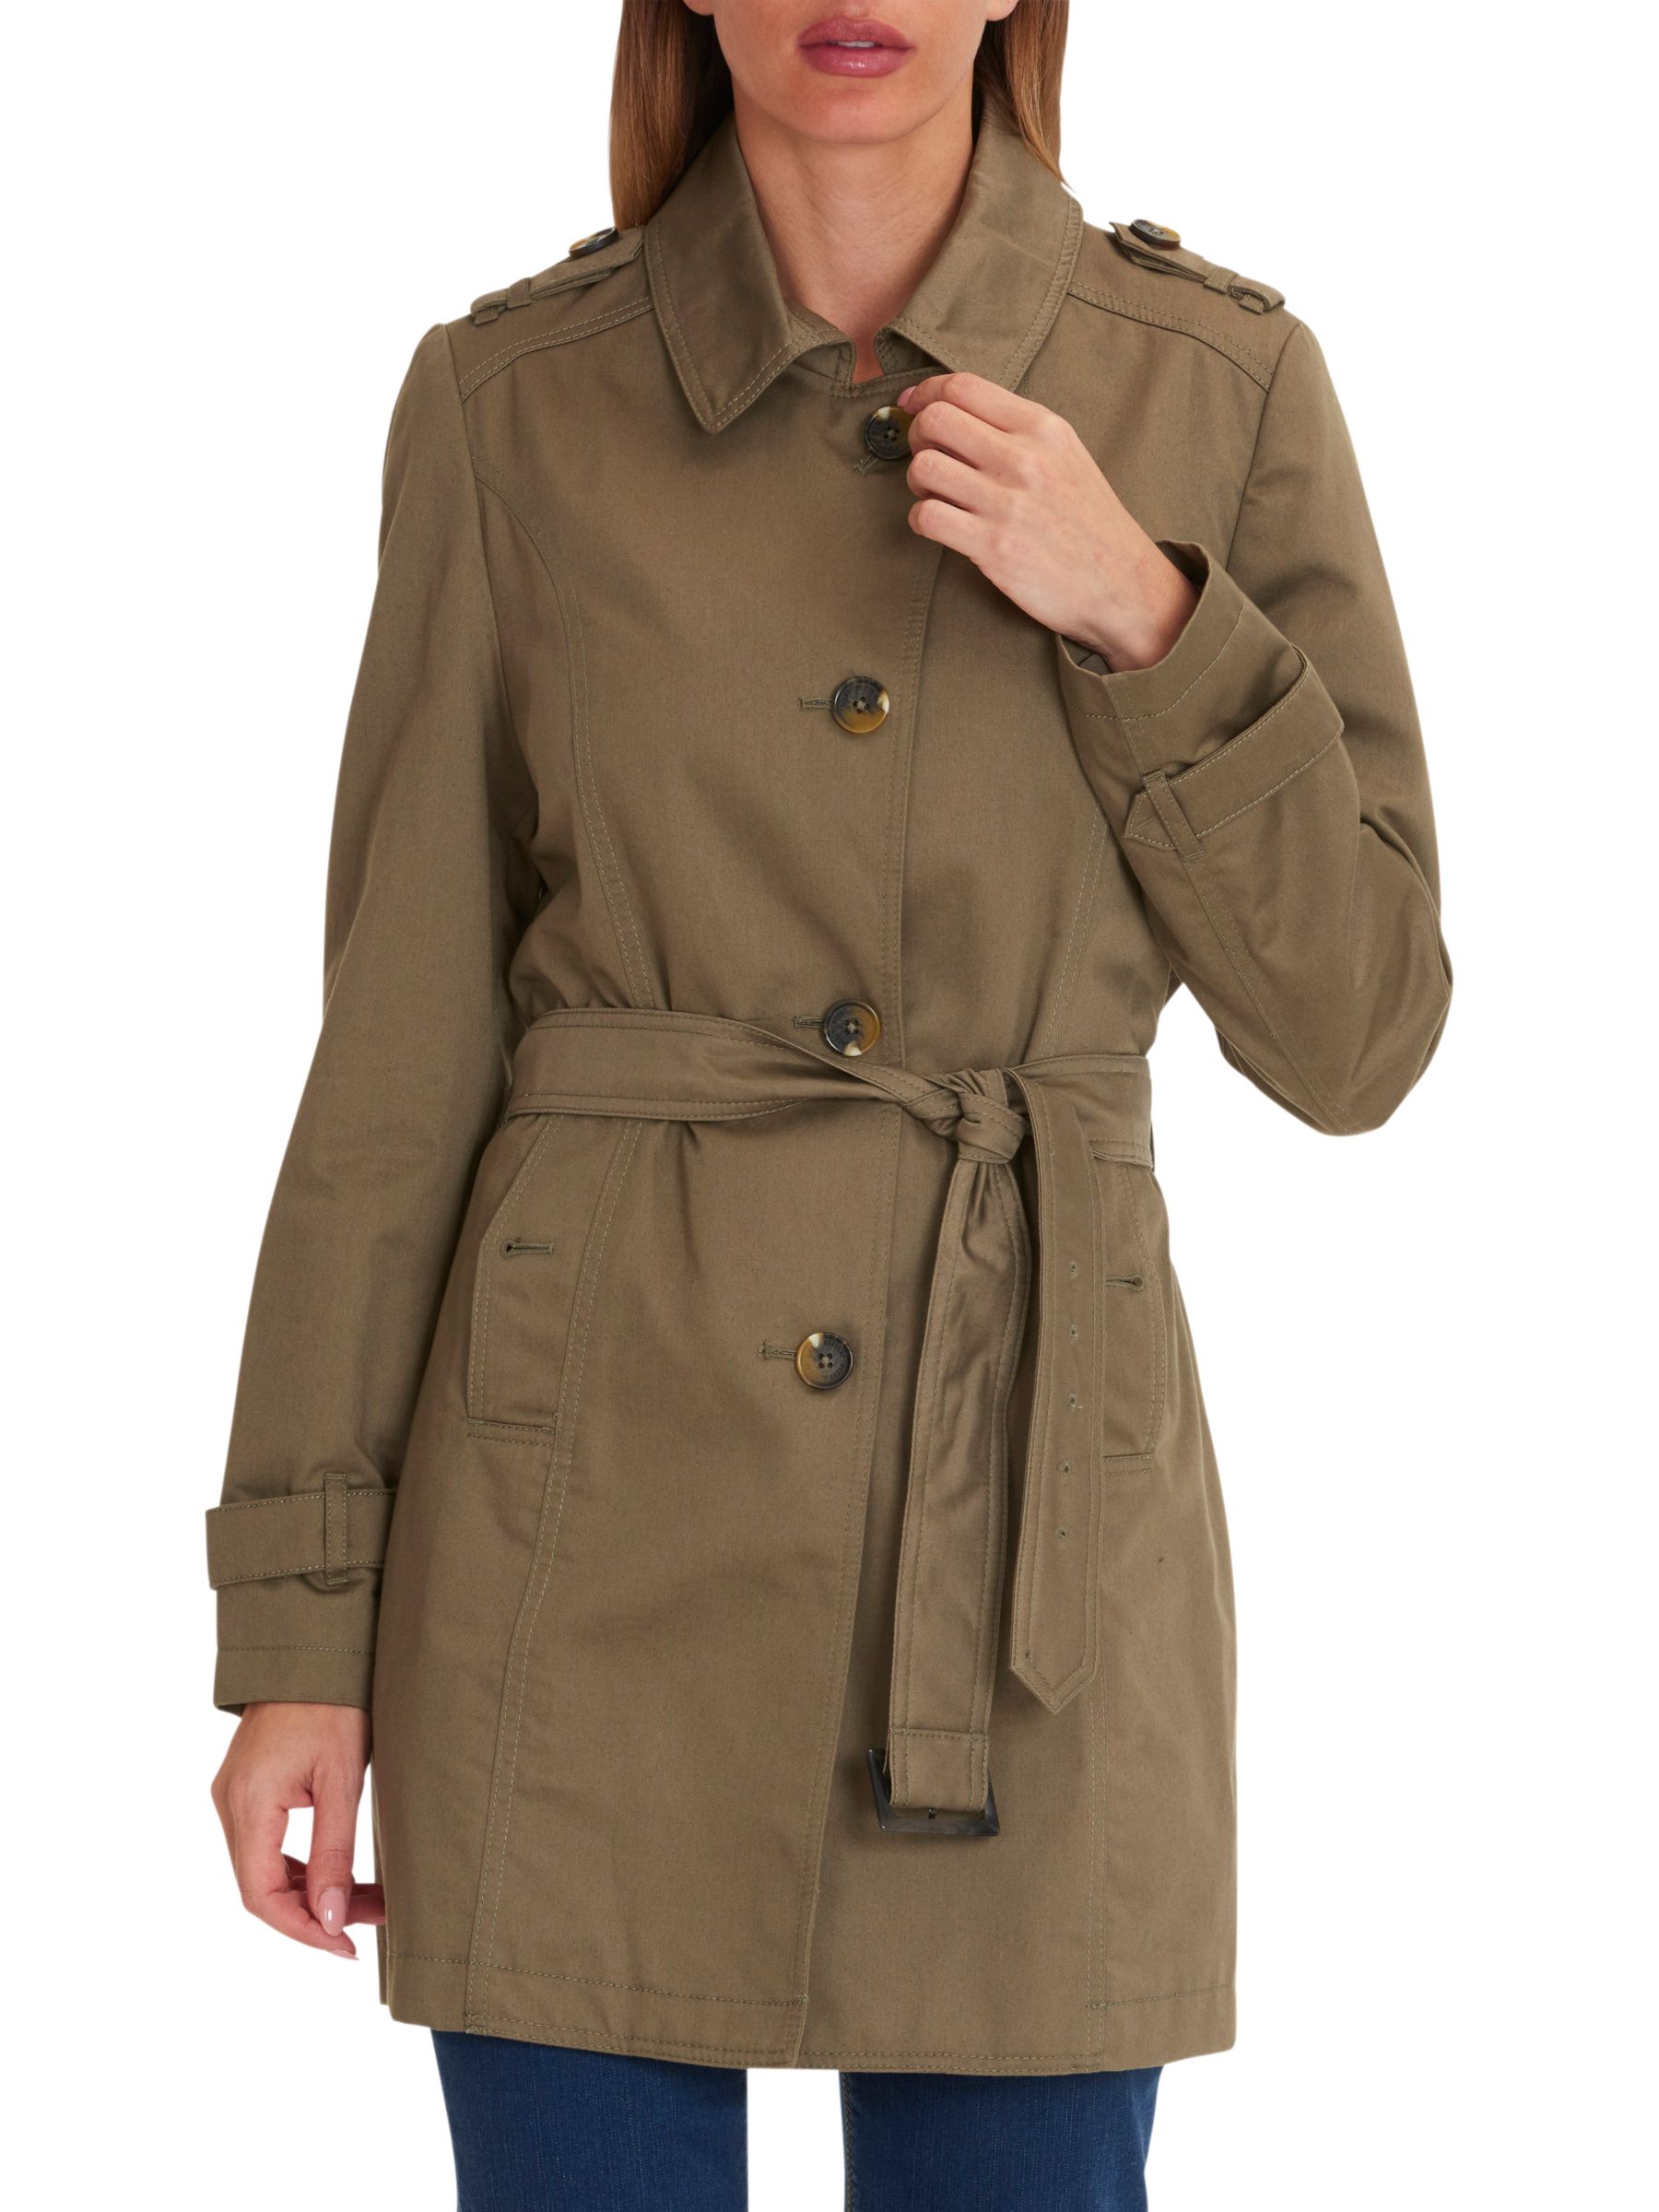 Trench Coats | Women's Coats & Jackets | John Lewis